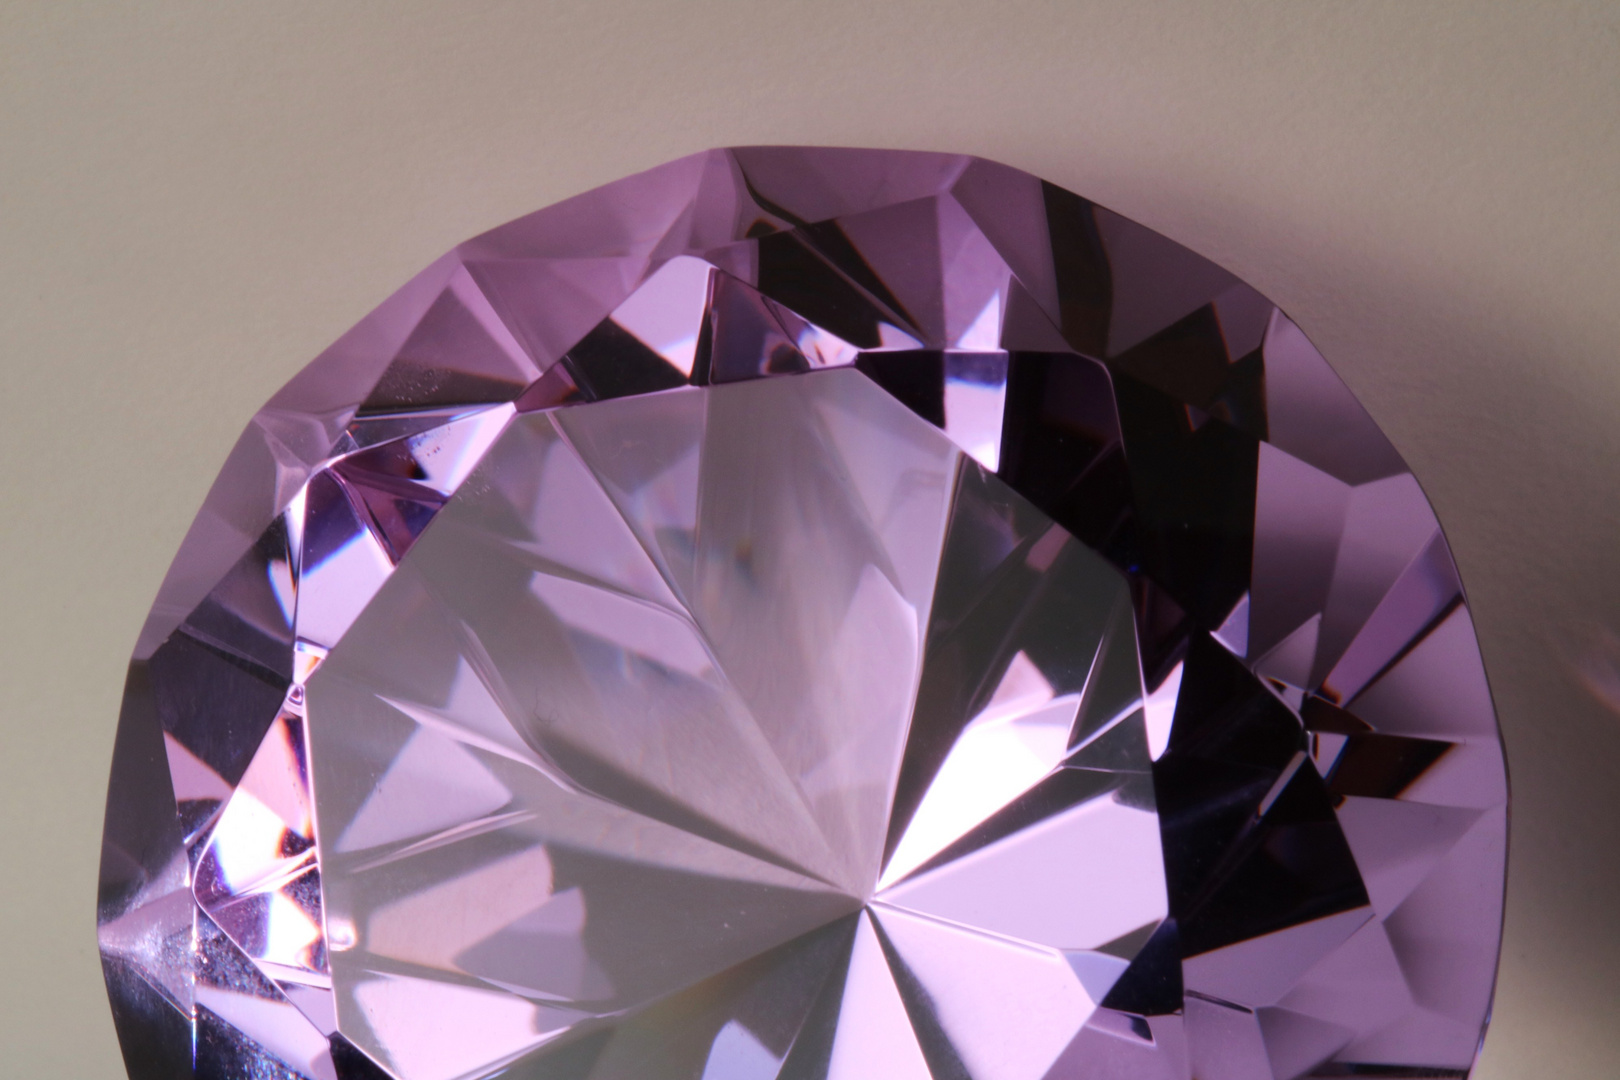 Blick in einen Glasdiamanten